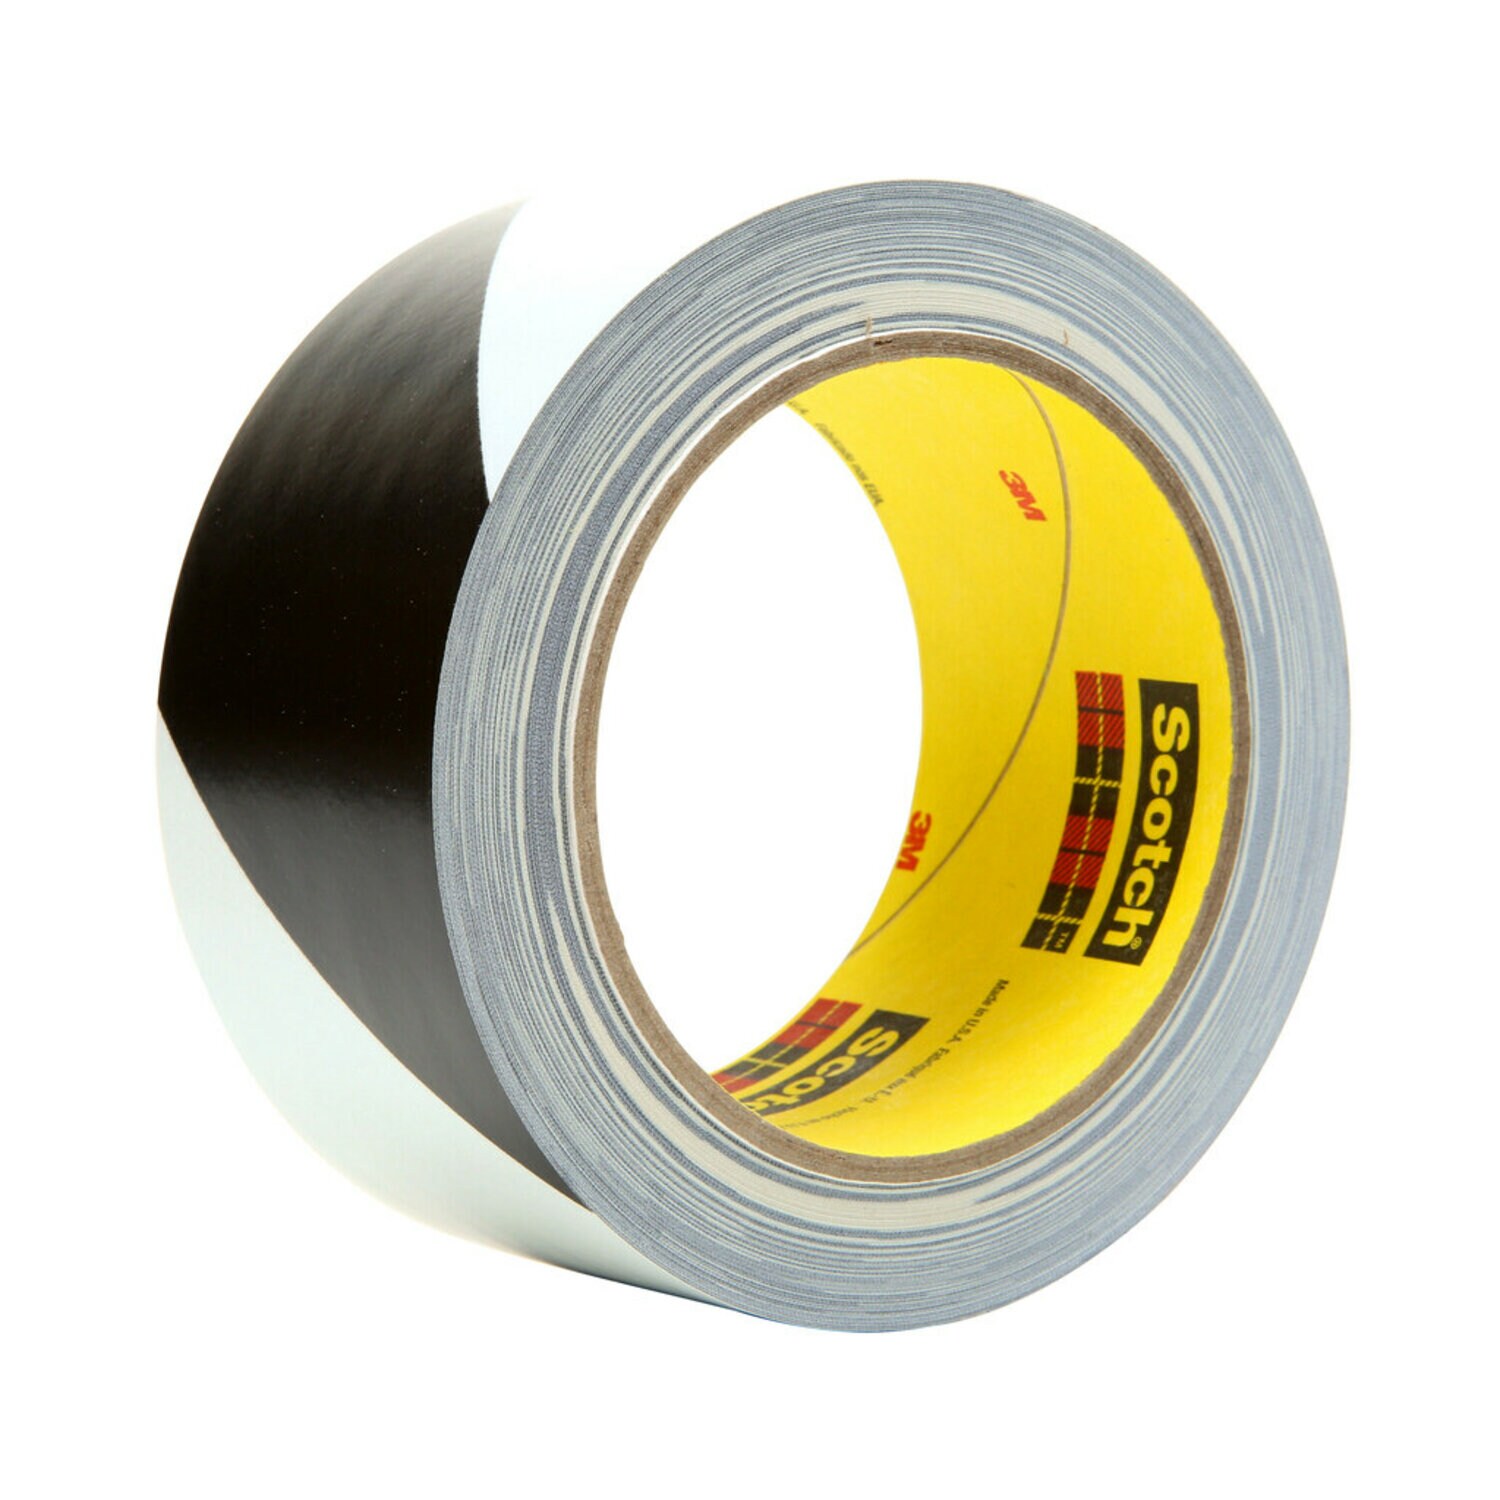 7000123282 - 3M Safety Stripe Vinyl Tape 5700, Black/White, 3 in x 36 yd, 5.4 mil, 12 Roll/Case